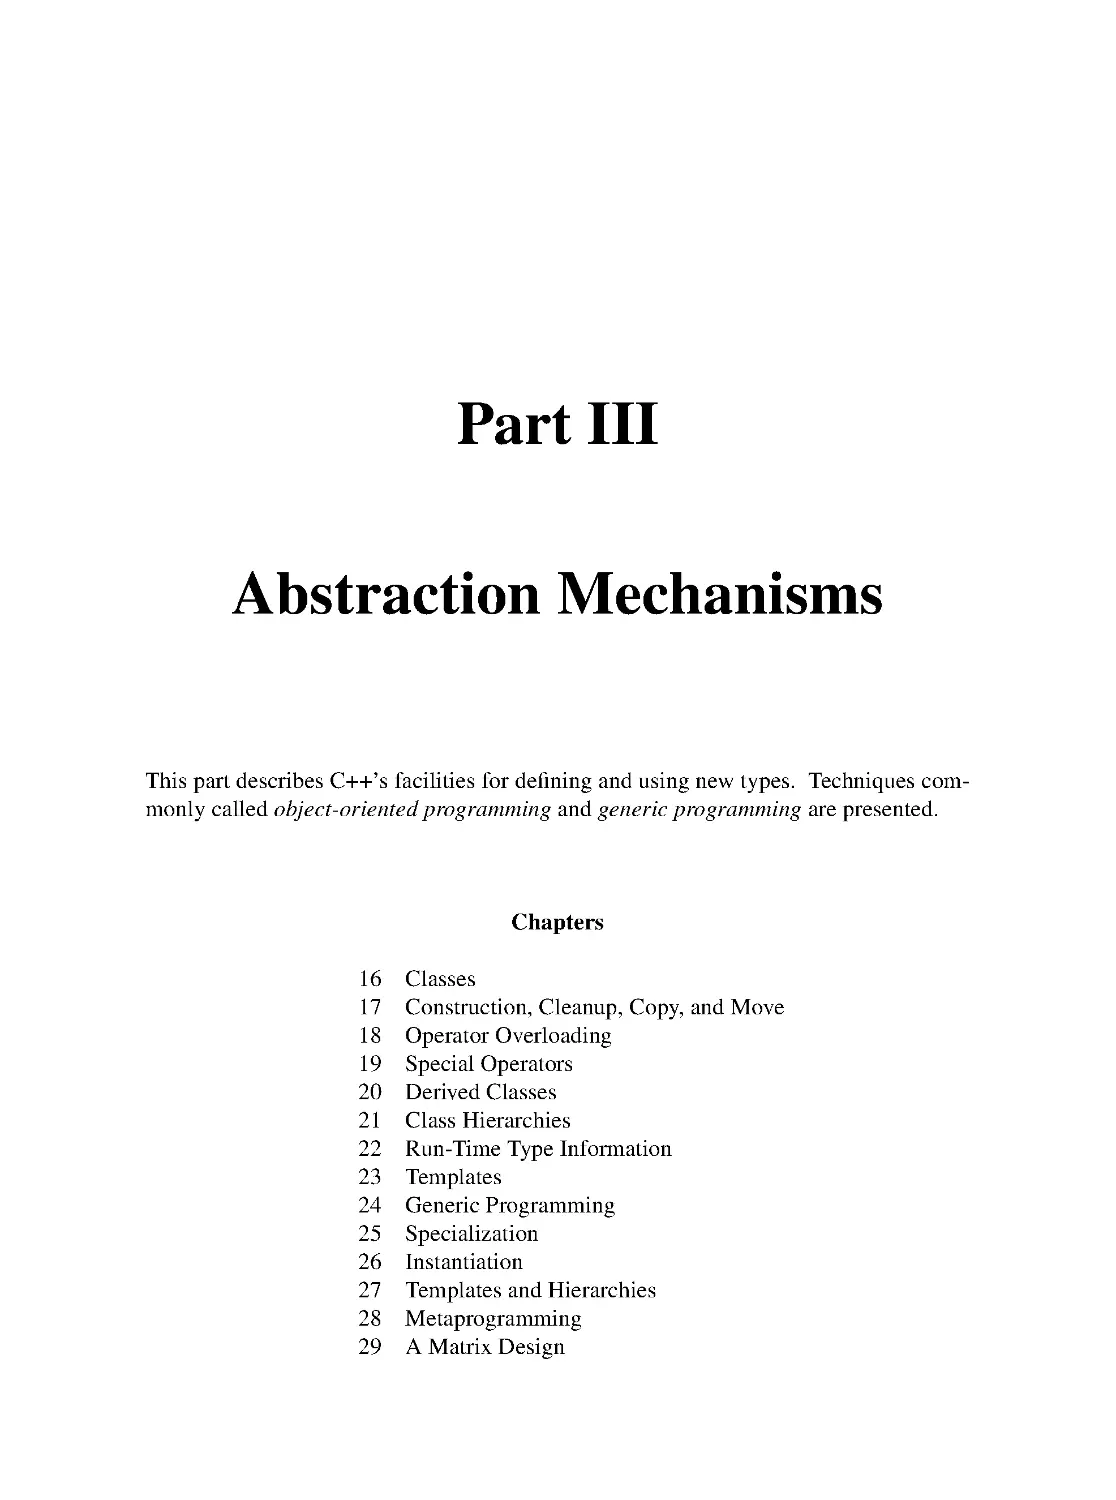 Part III: Abstraction Mechanisms